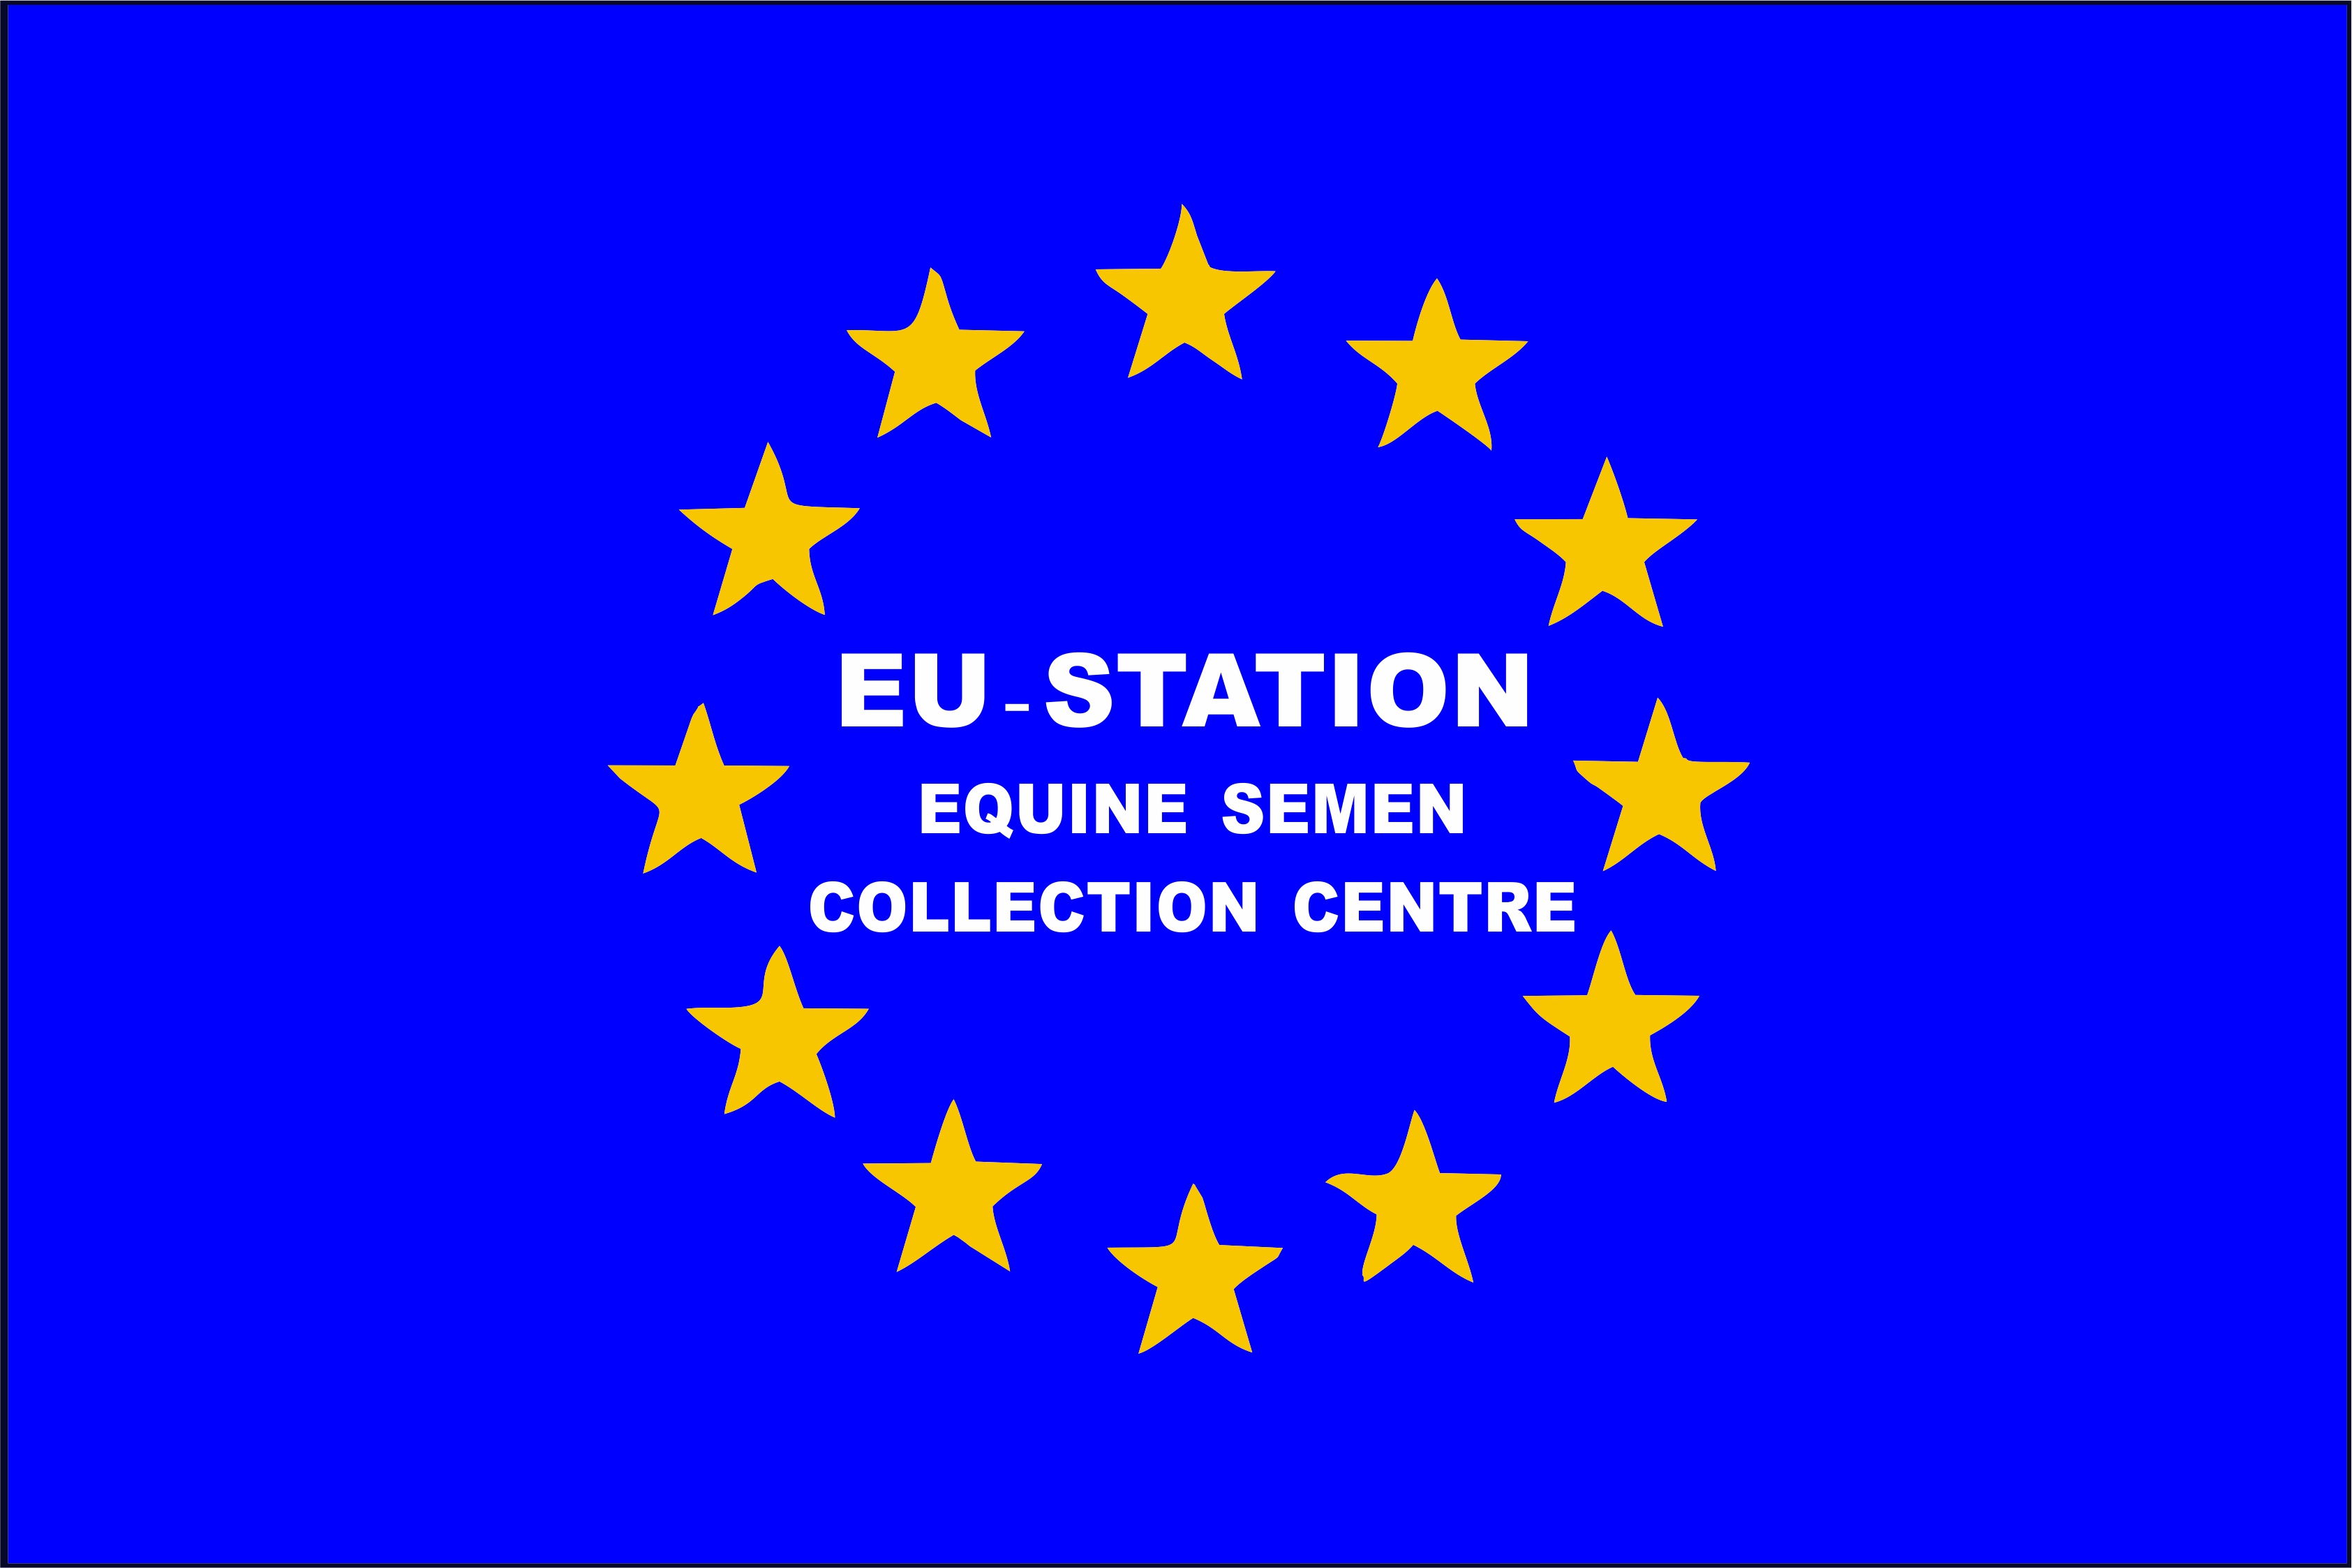 Equine Semen Collection Centre